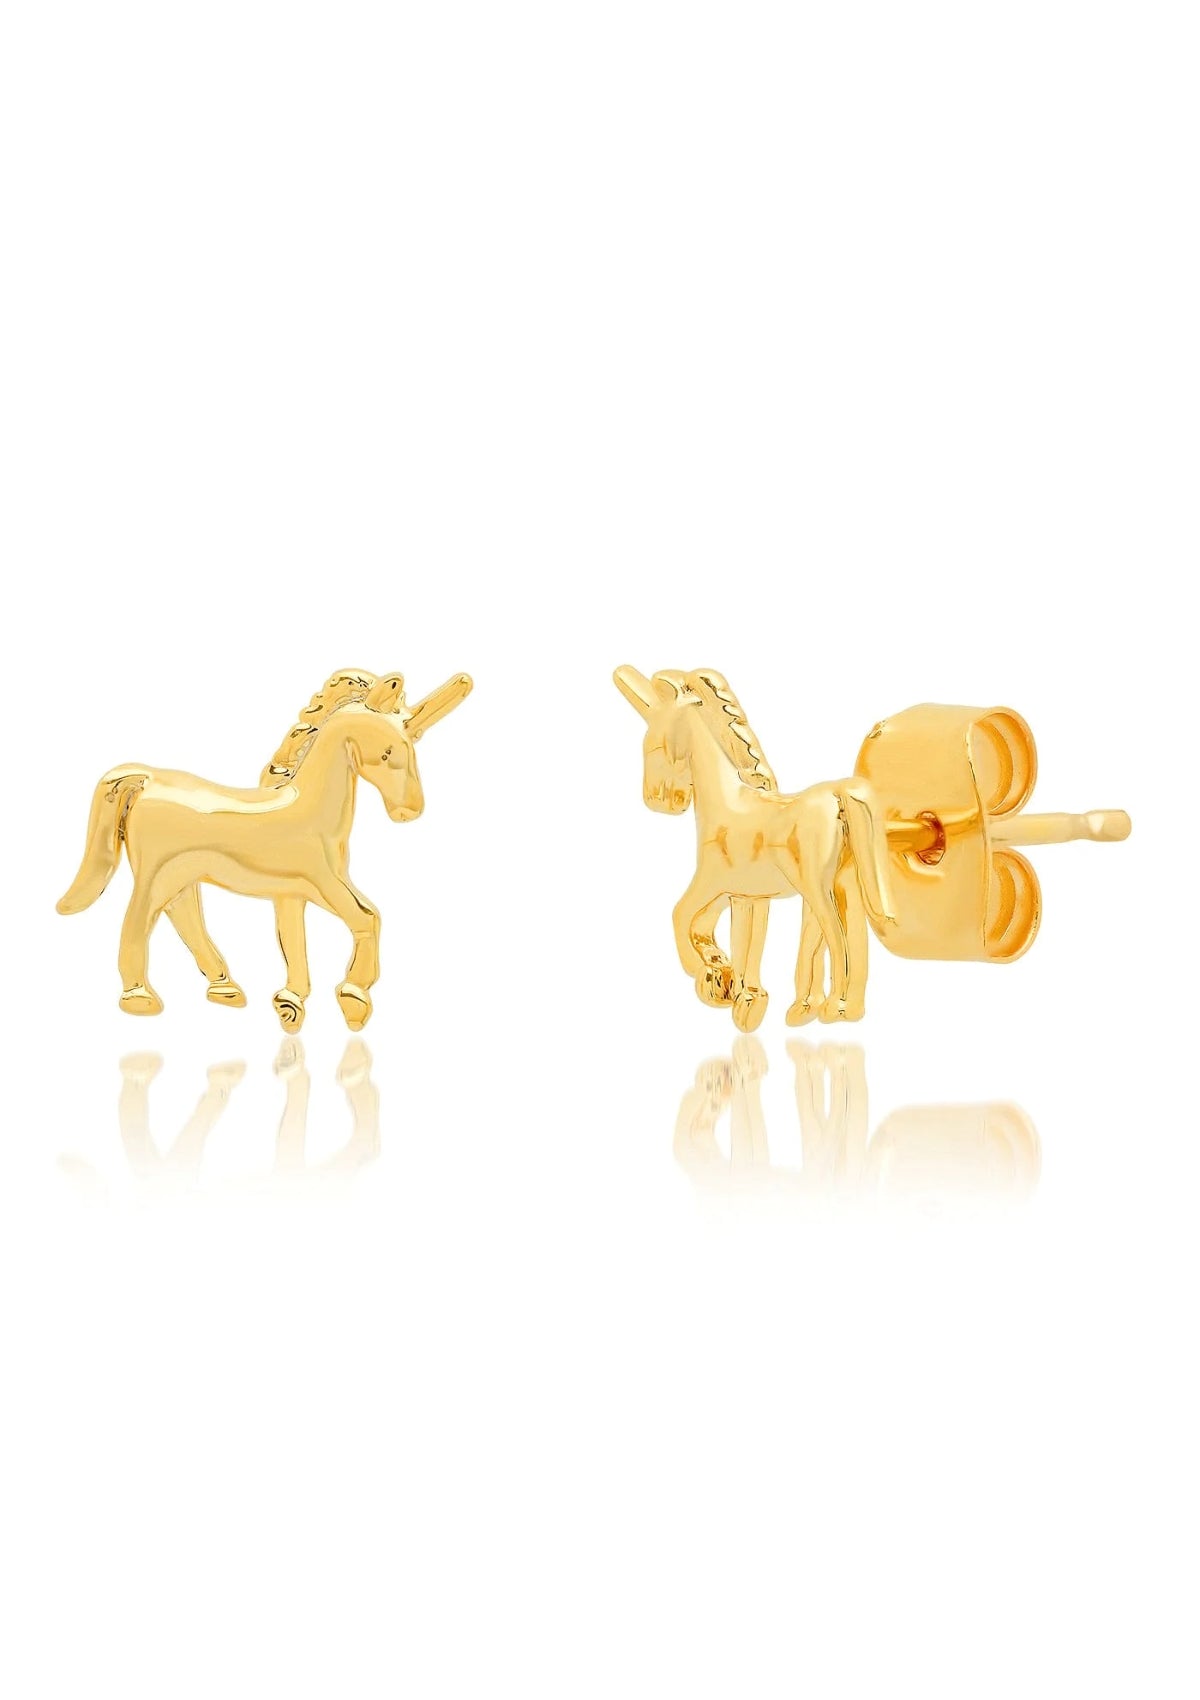 Gold unicorn earring with friction backing-Ruby Jane.